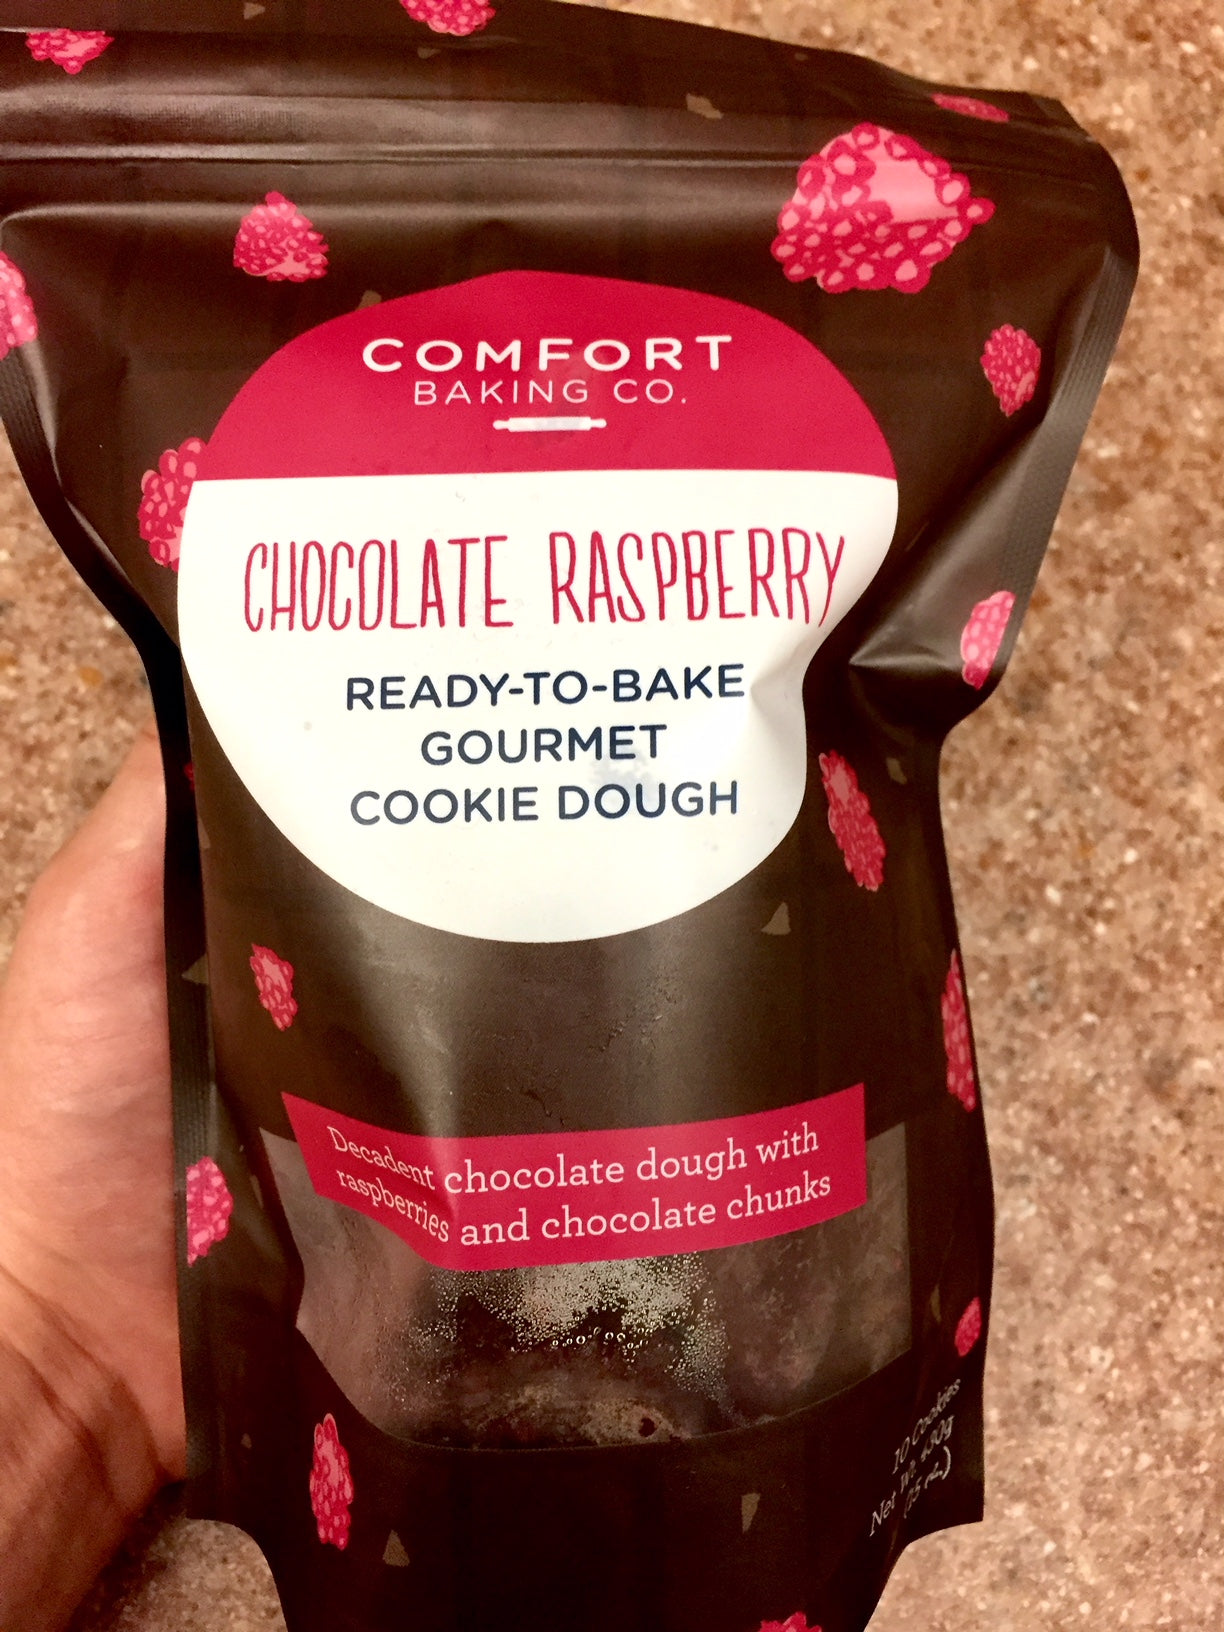 Comfort Baking Co. Chocolate Raspberry Cookie Dough